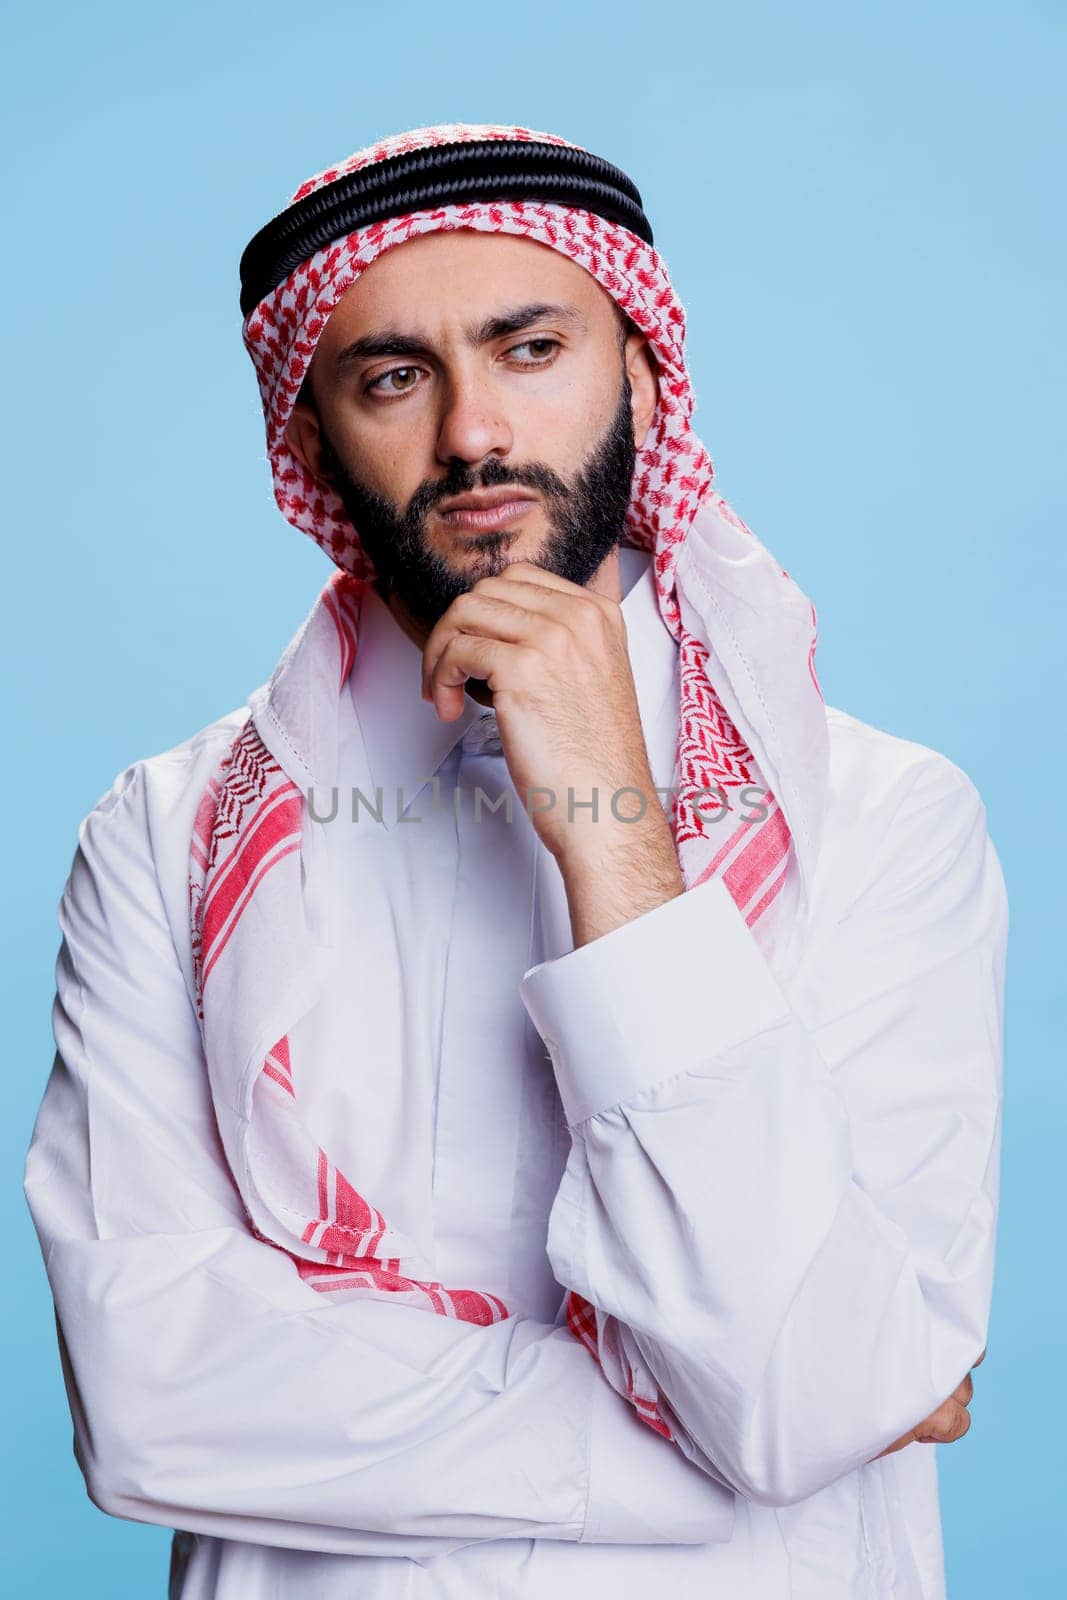 Arab in traditional attire contemplating by DCStudio